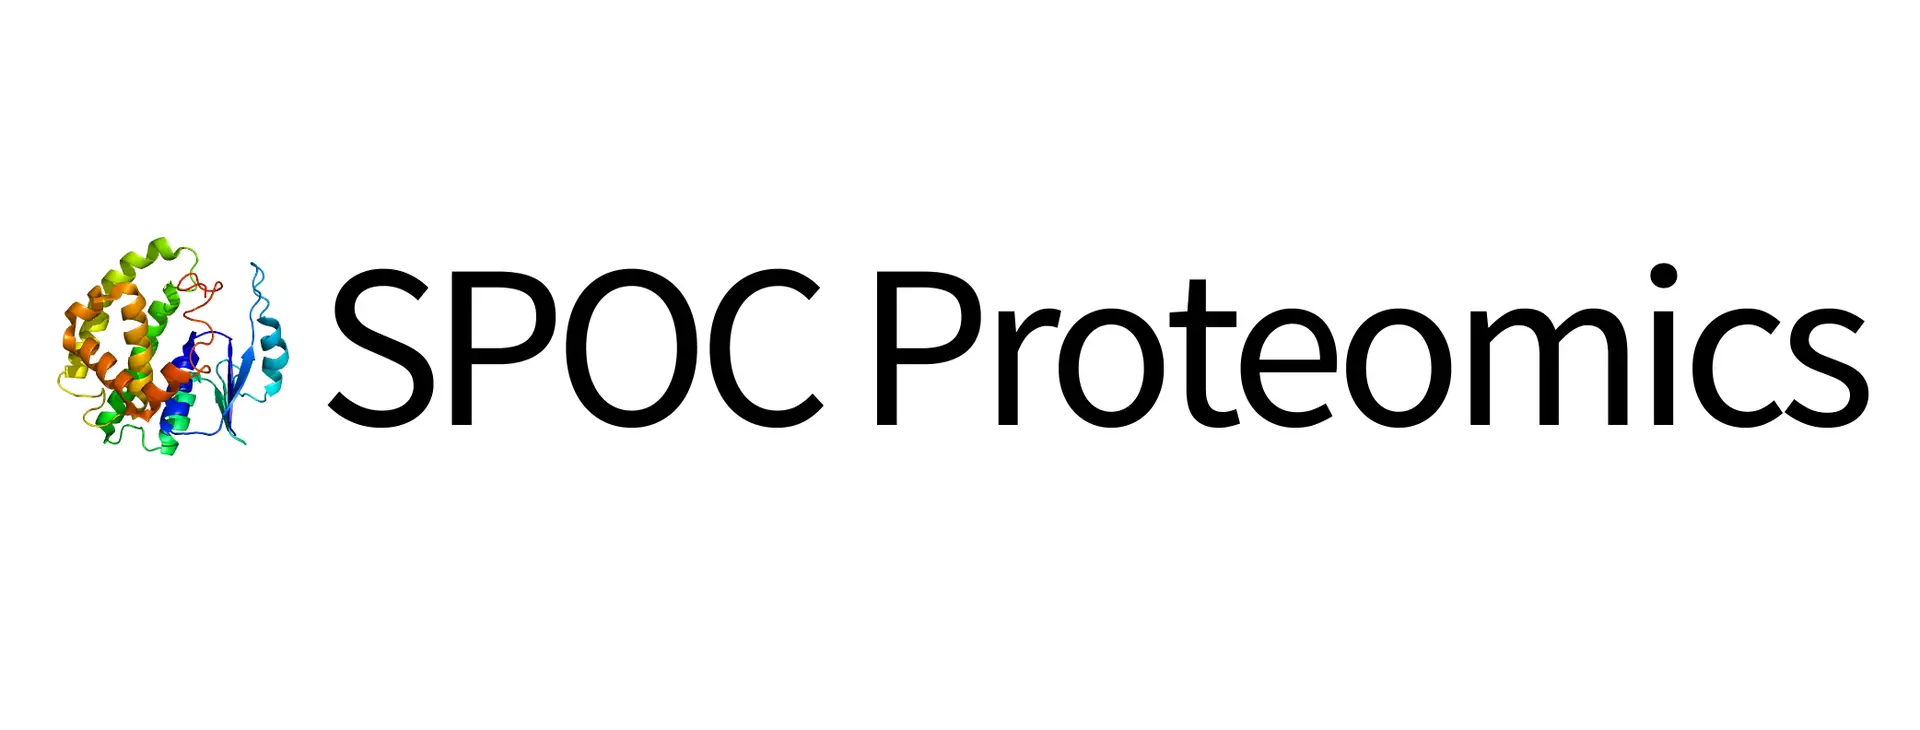 SPOC Proteomics